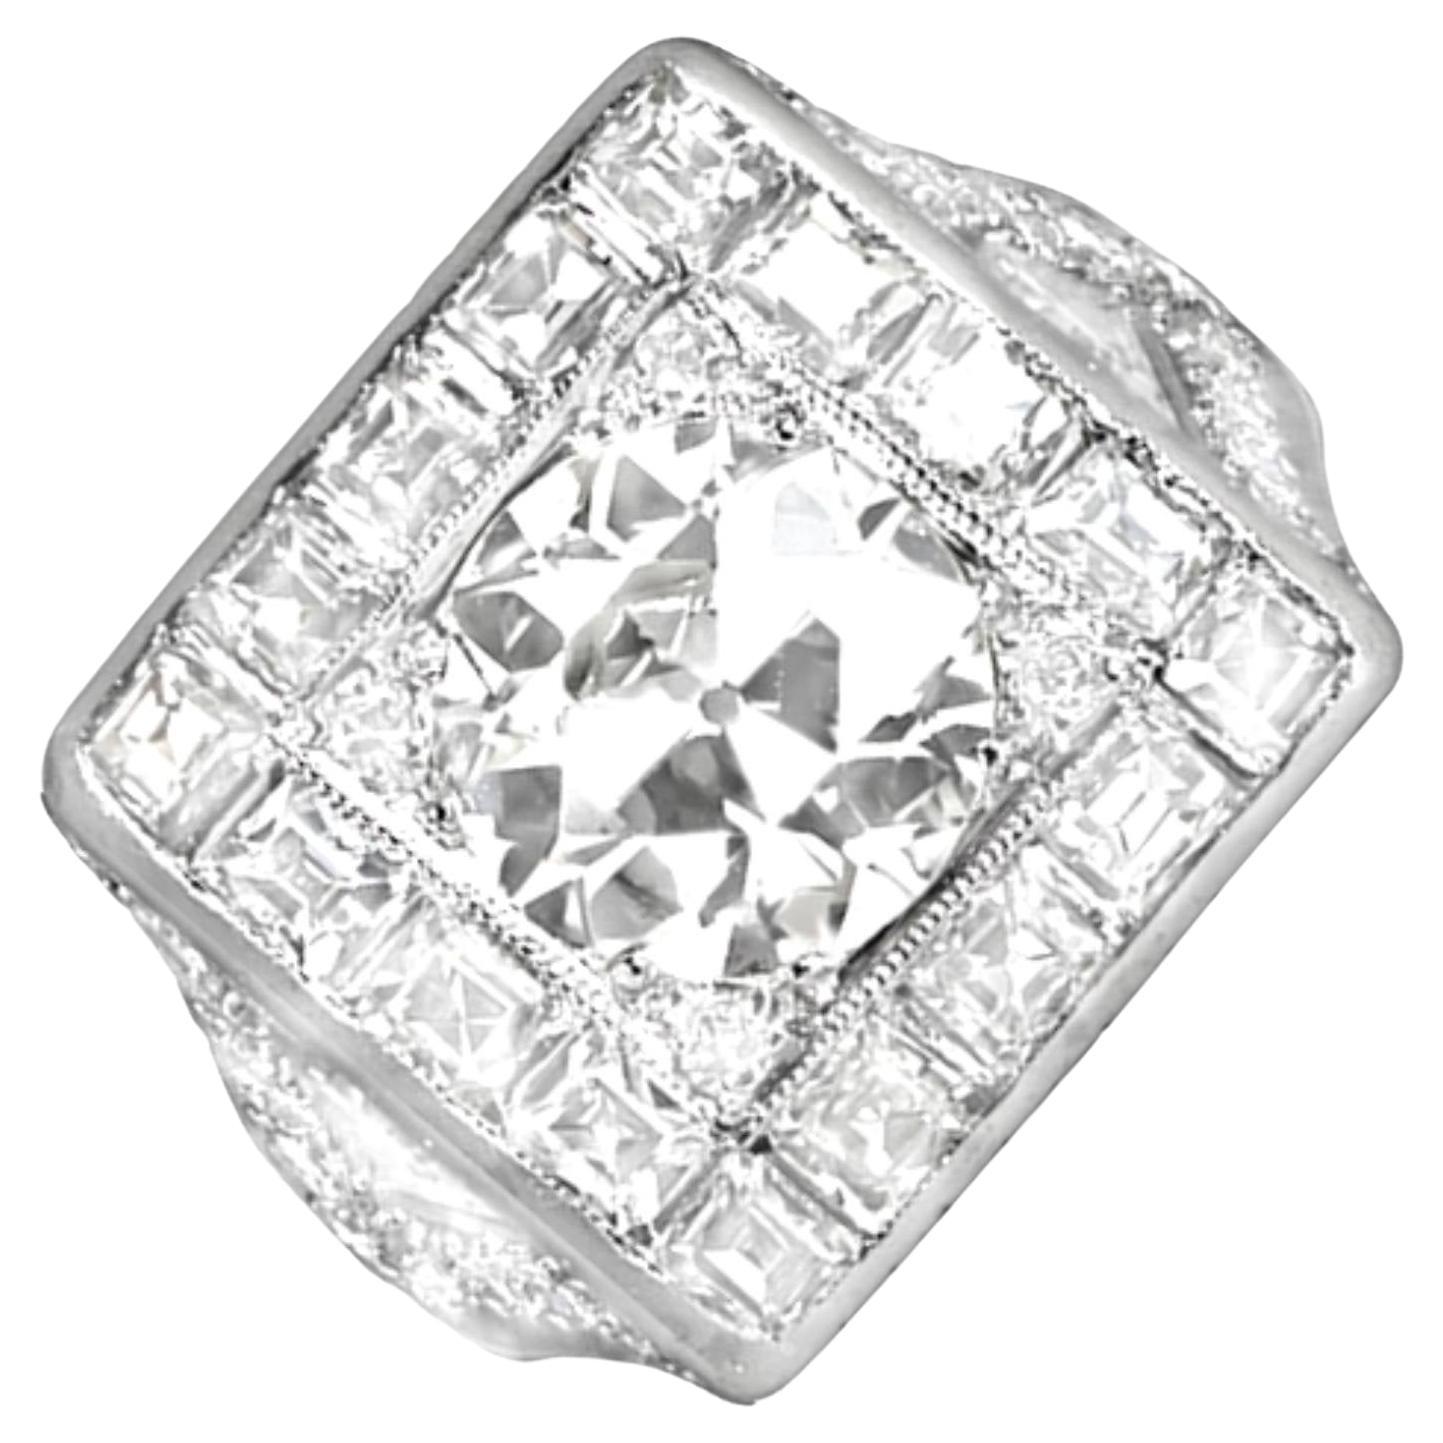 Vintage 1.75 Carat Old Euro-Cut Diamond Engagement Ring, Diamond Halo, Platinum